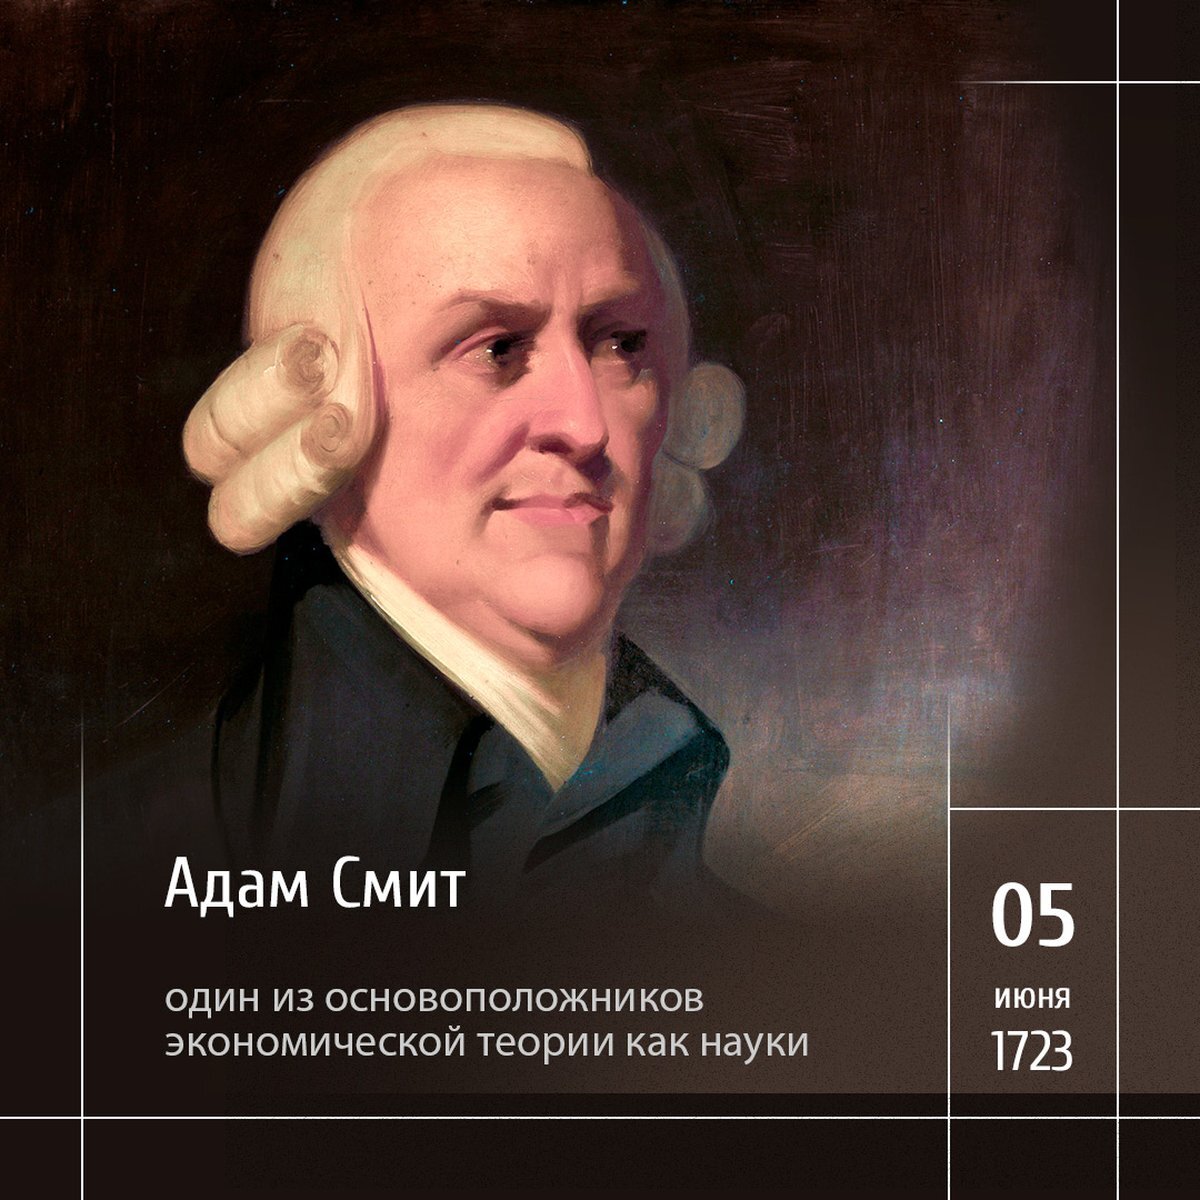 1 Portrait of the political economist and philosopher Adam Smith